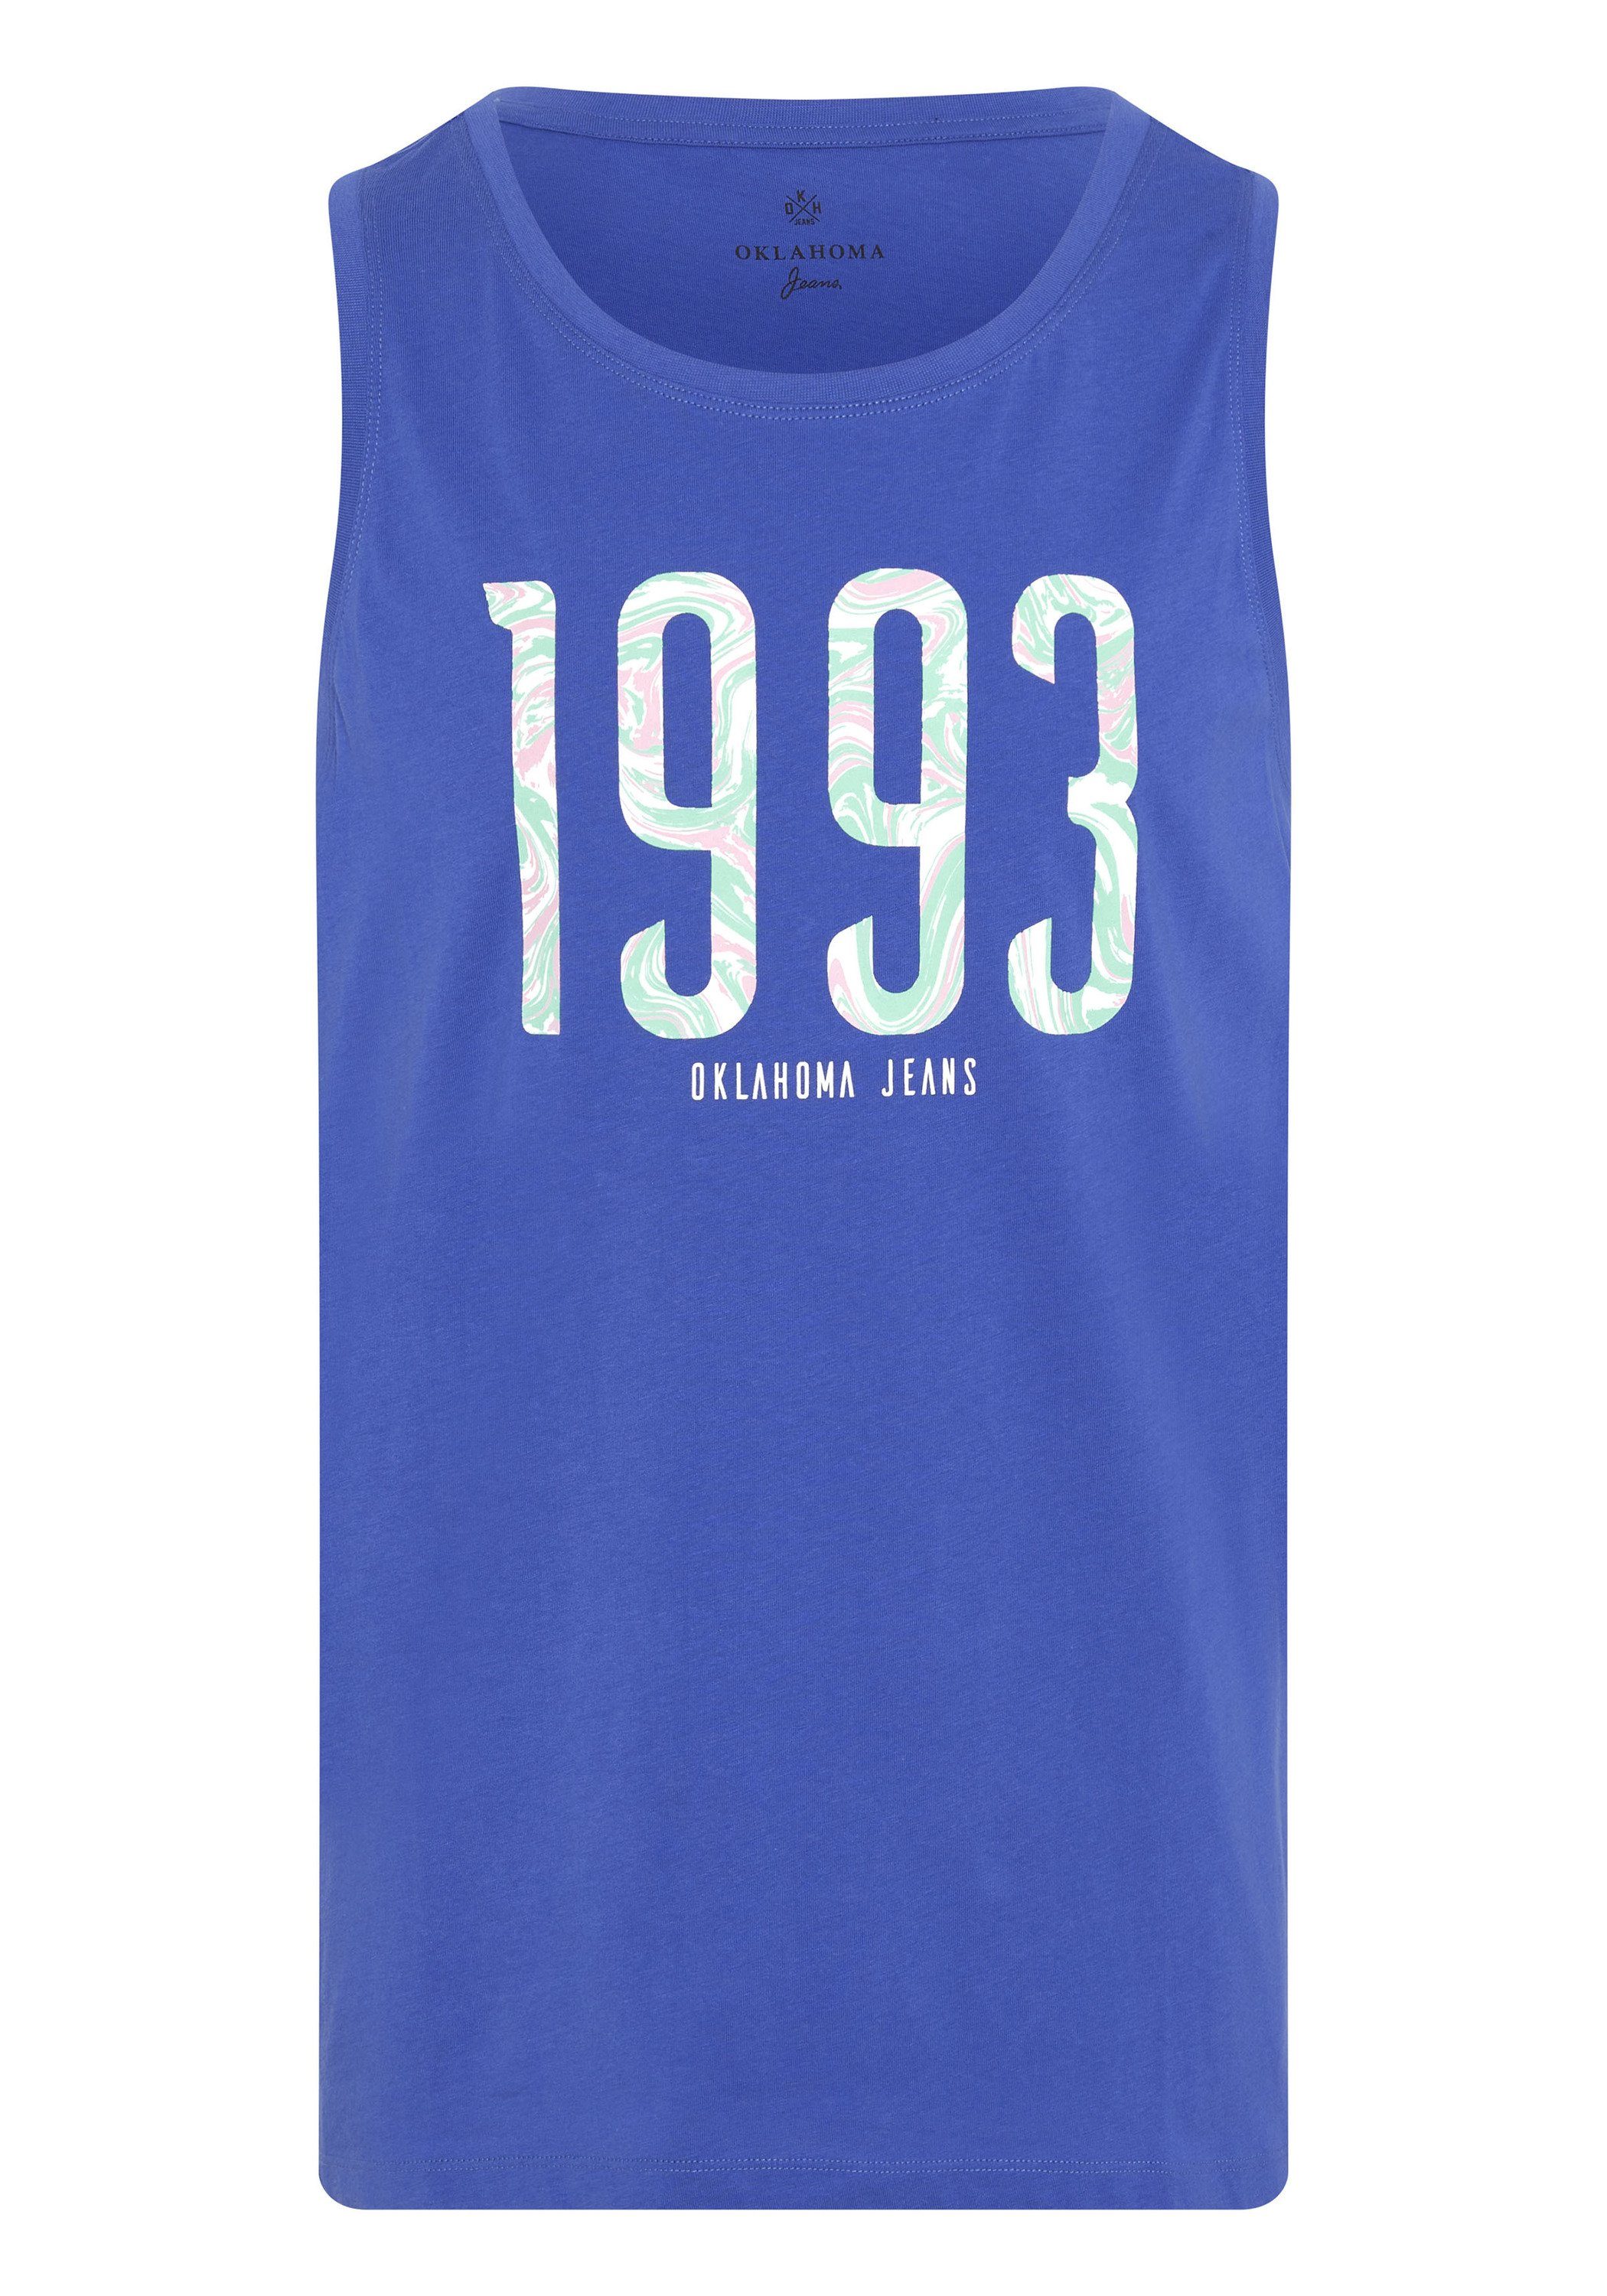 18-3949 1993-Print Jeans Oklahoma Tanktop Dazzling Blue mit